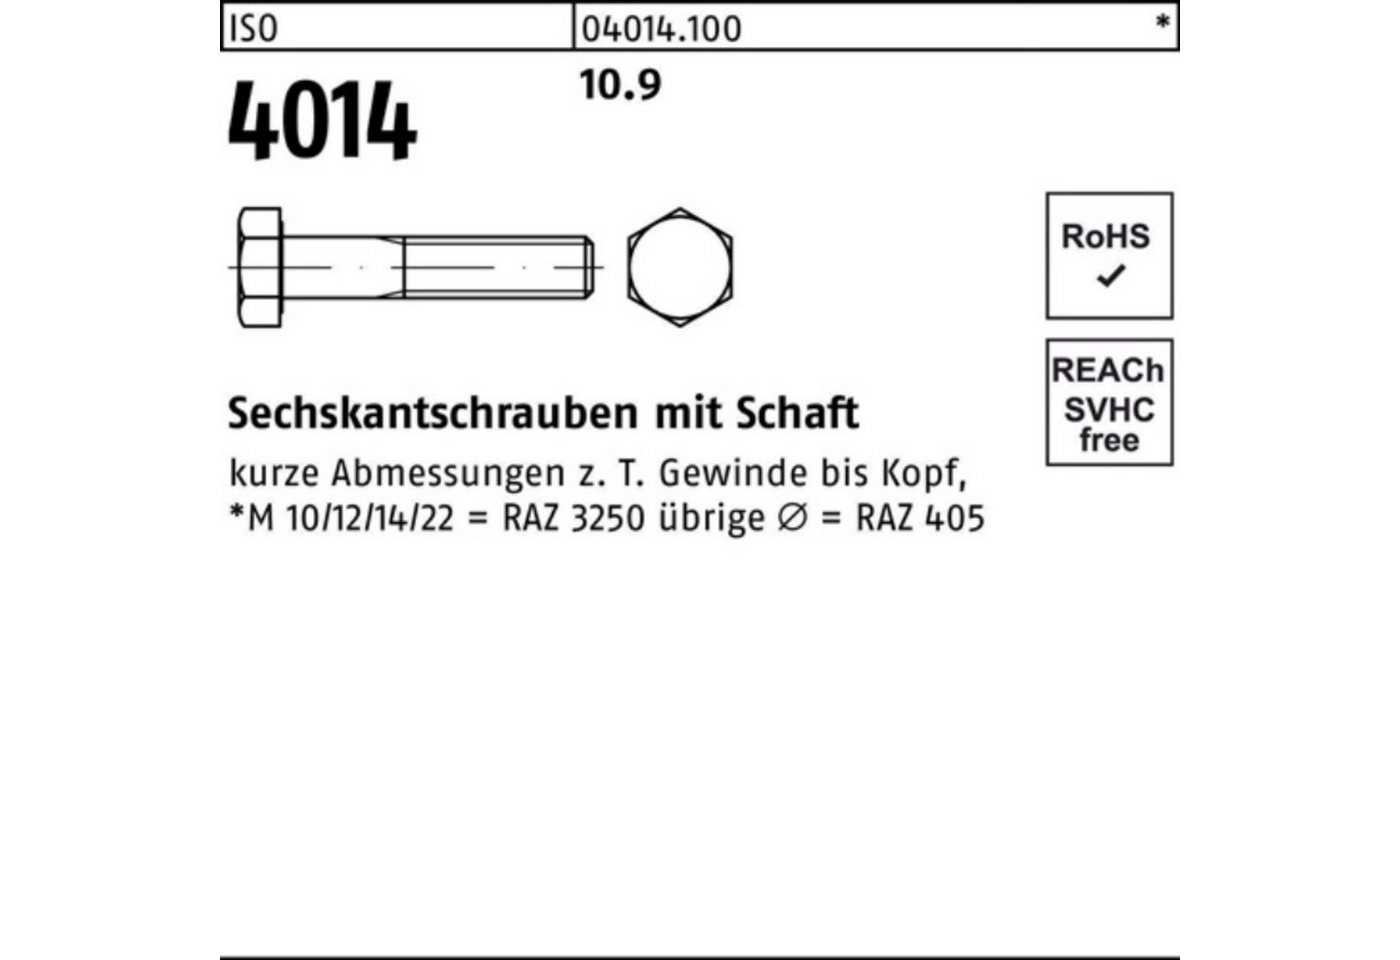 Bufab Sechskantschraube 100er Pack Sechskantschraube ISO 4014 Schaft M18x 200 10.9 1 Stück IS von Bufab